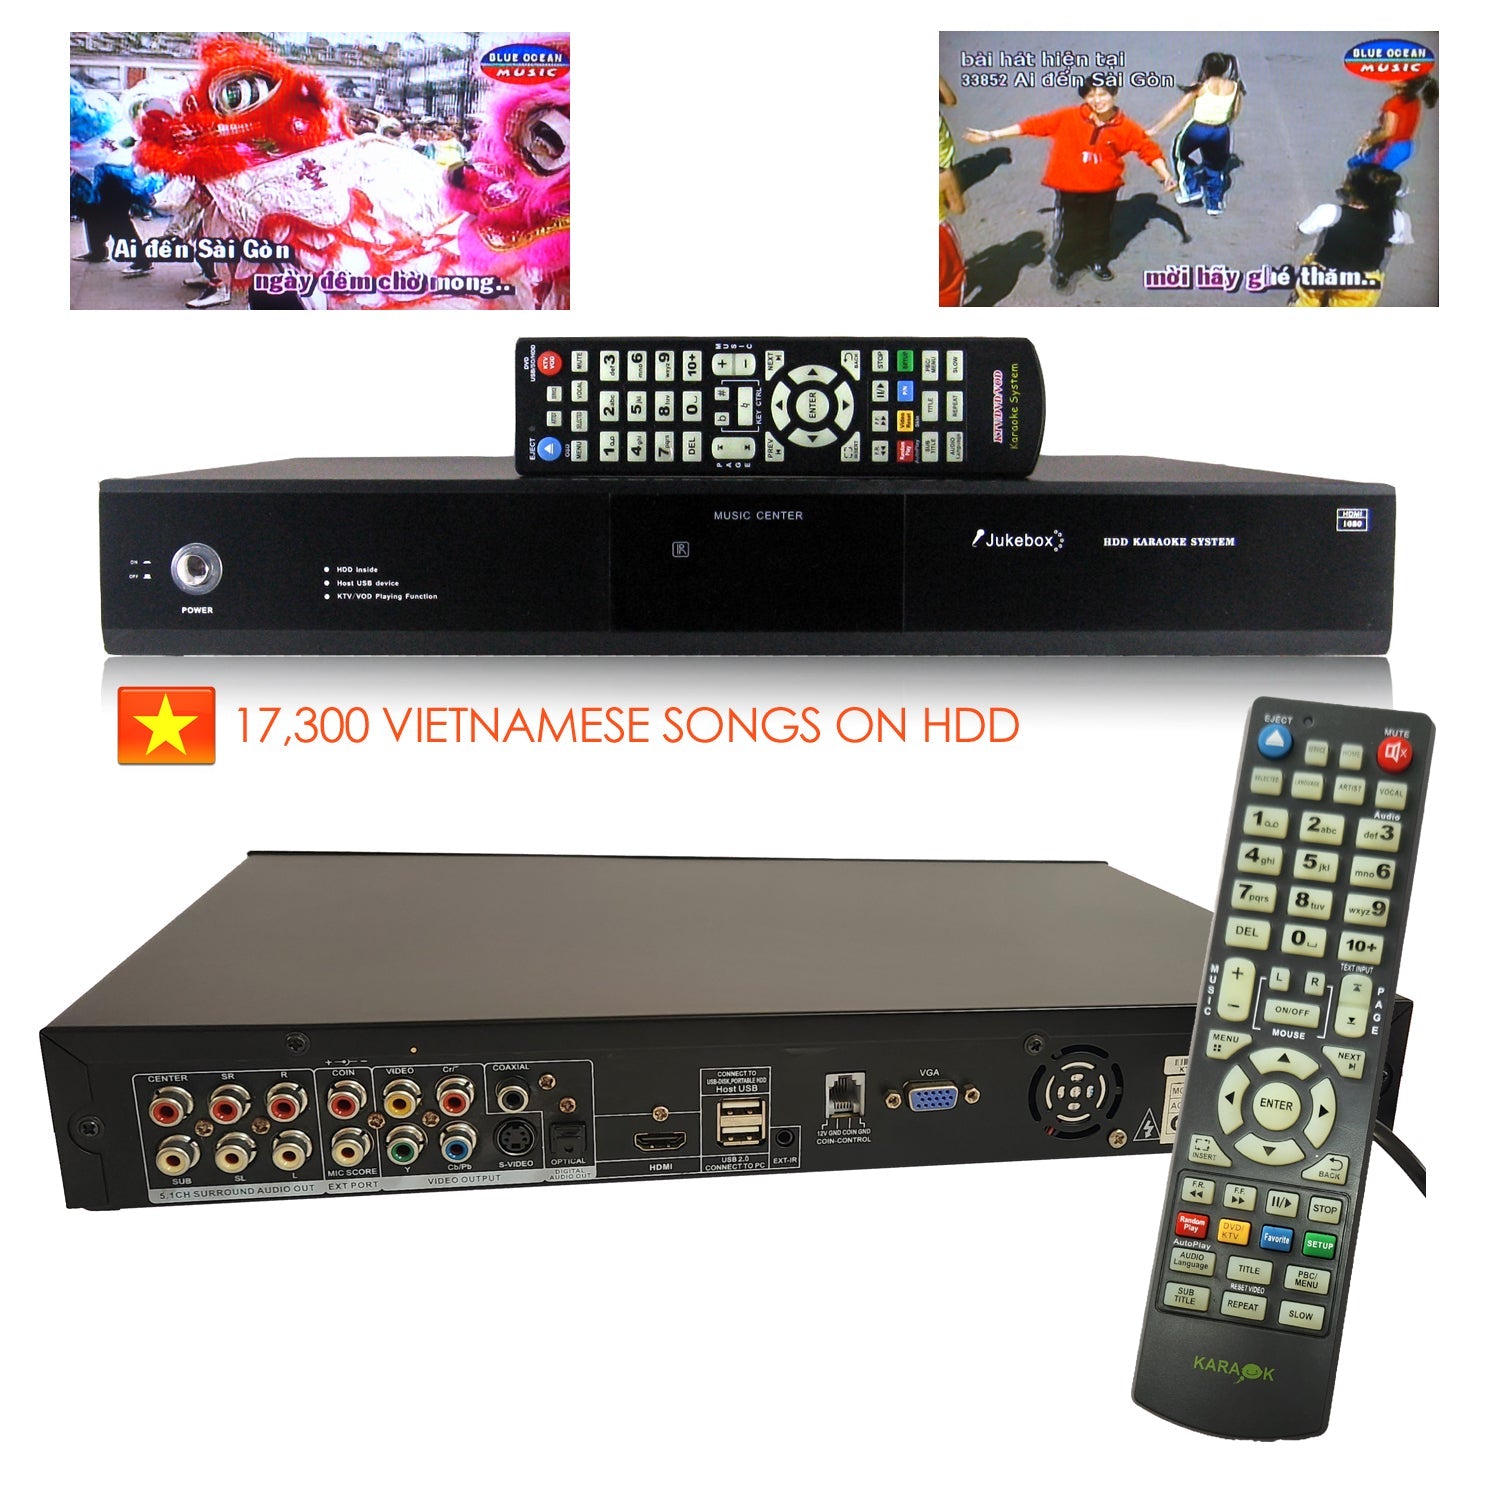 Vietnamese Karaoke Hard Drive System with 17,300 Songs (1TB) - Karaoke Home Entertainment